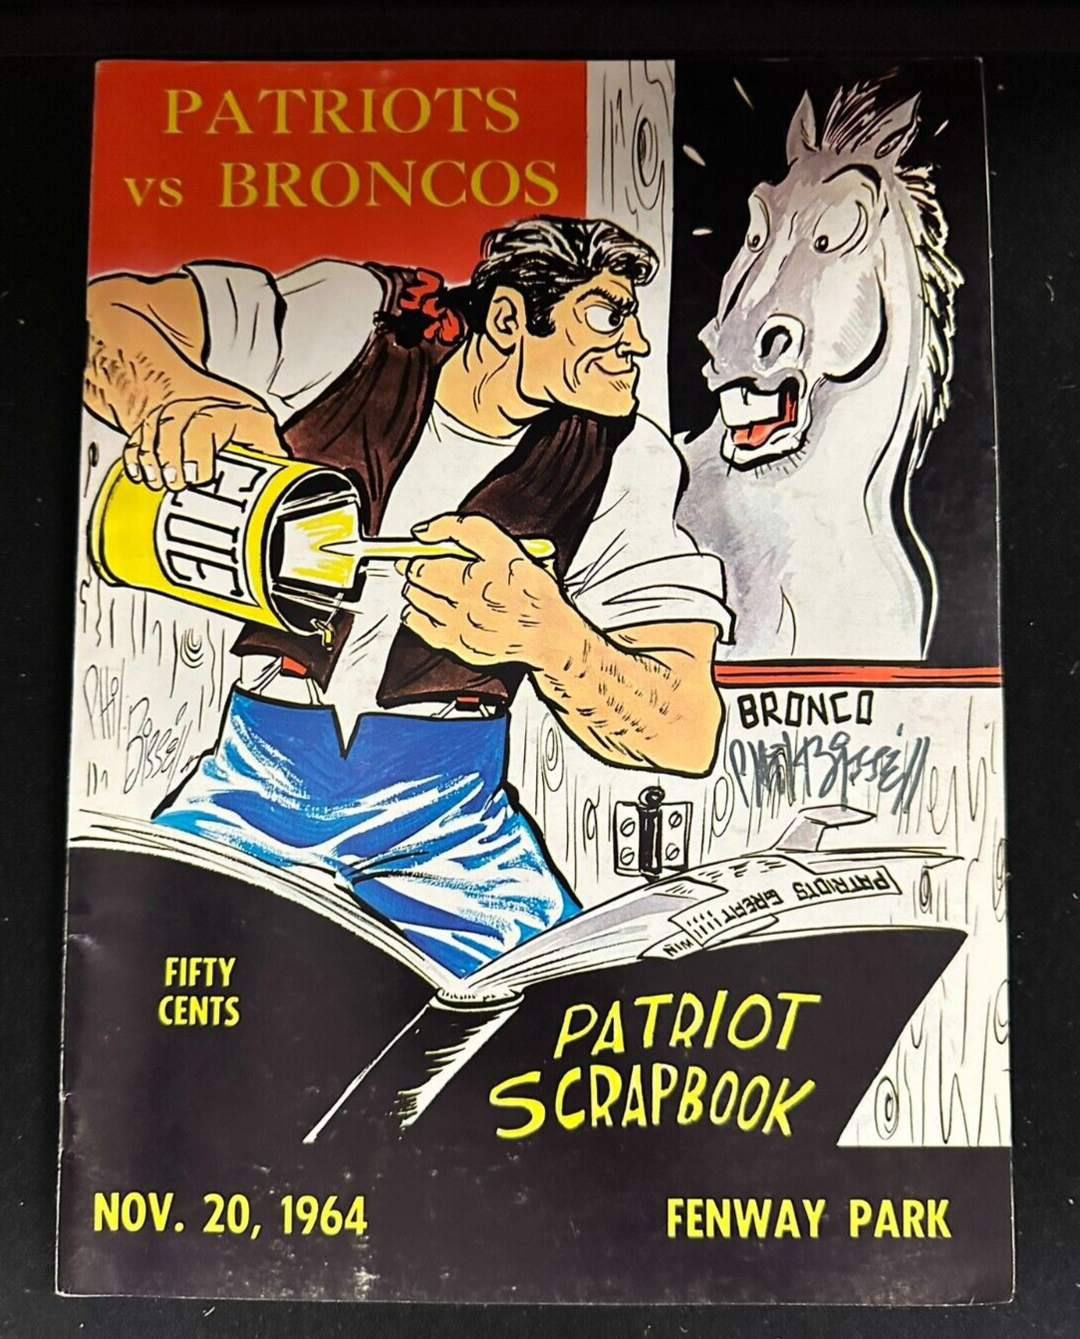 Phil Bissell Autographed Nov 20, 1964 Boston Patriots Vs Broncos Program AFL